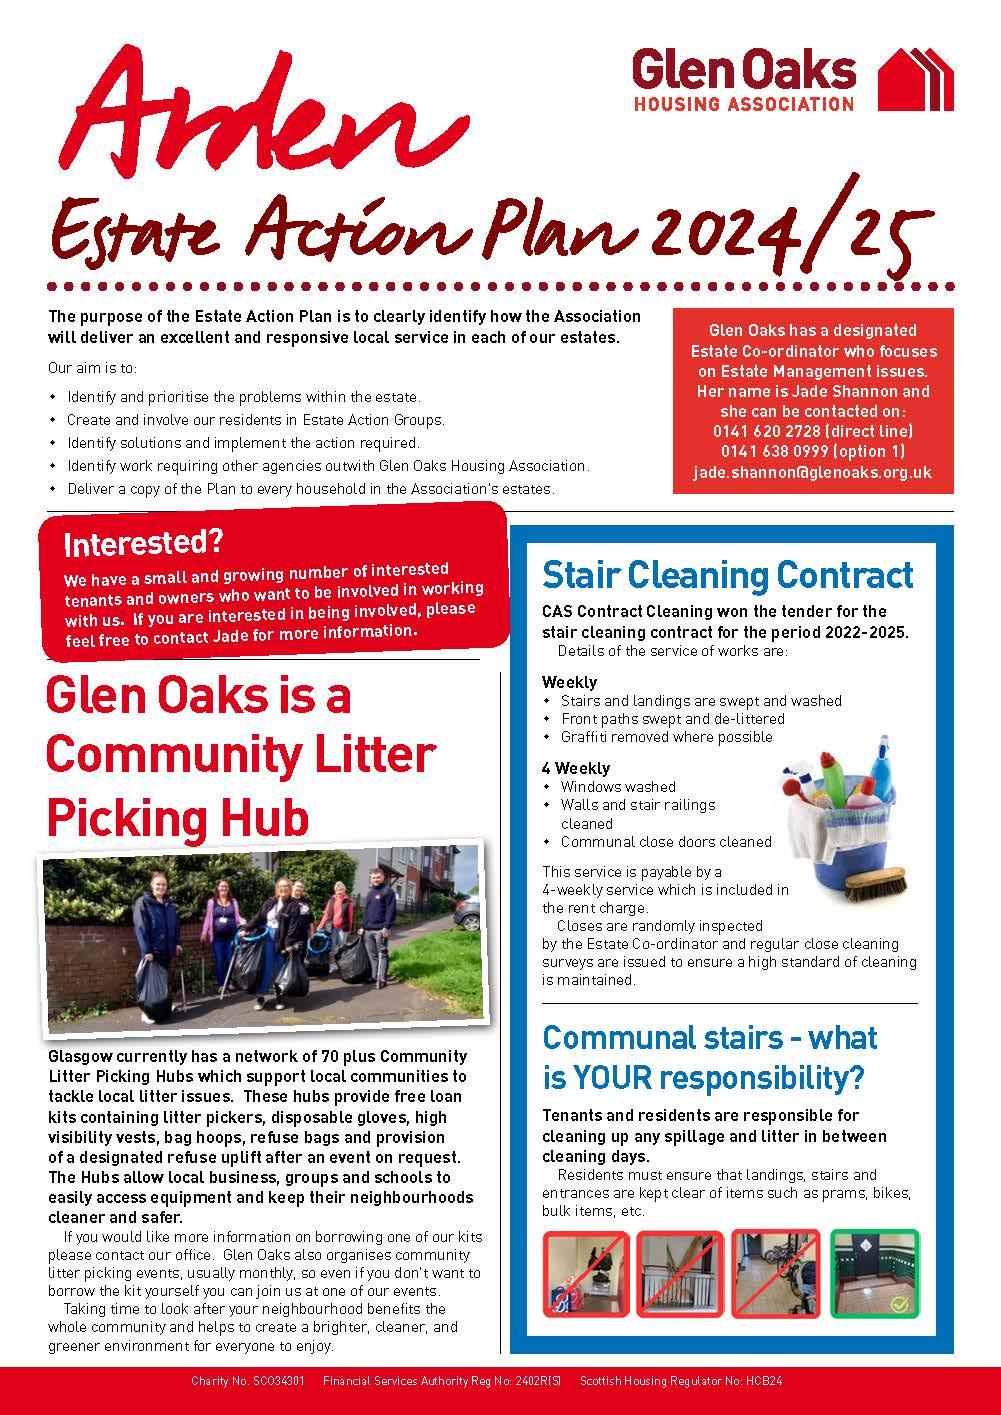 Arden Estate Action Plan 2024 image